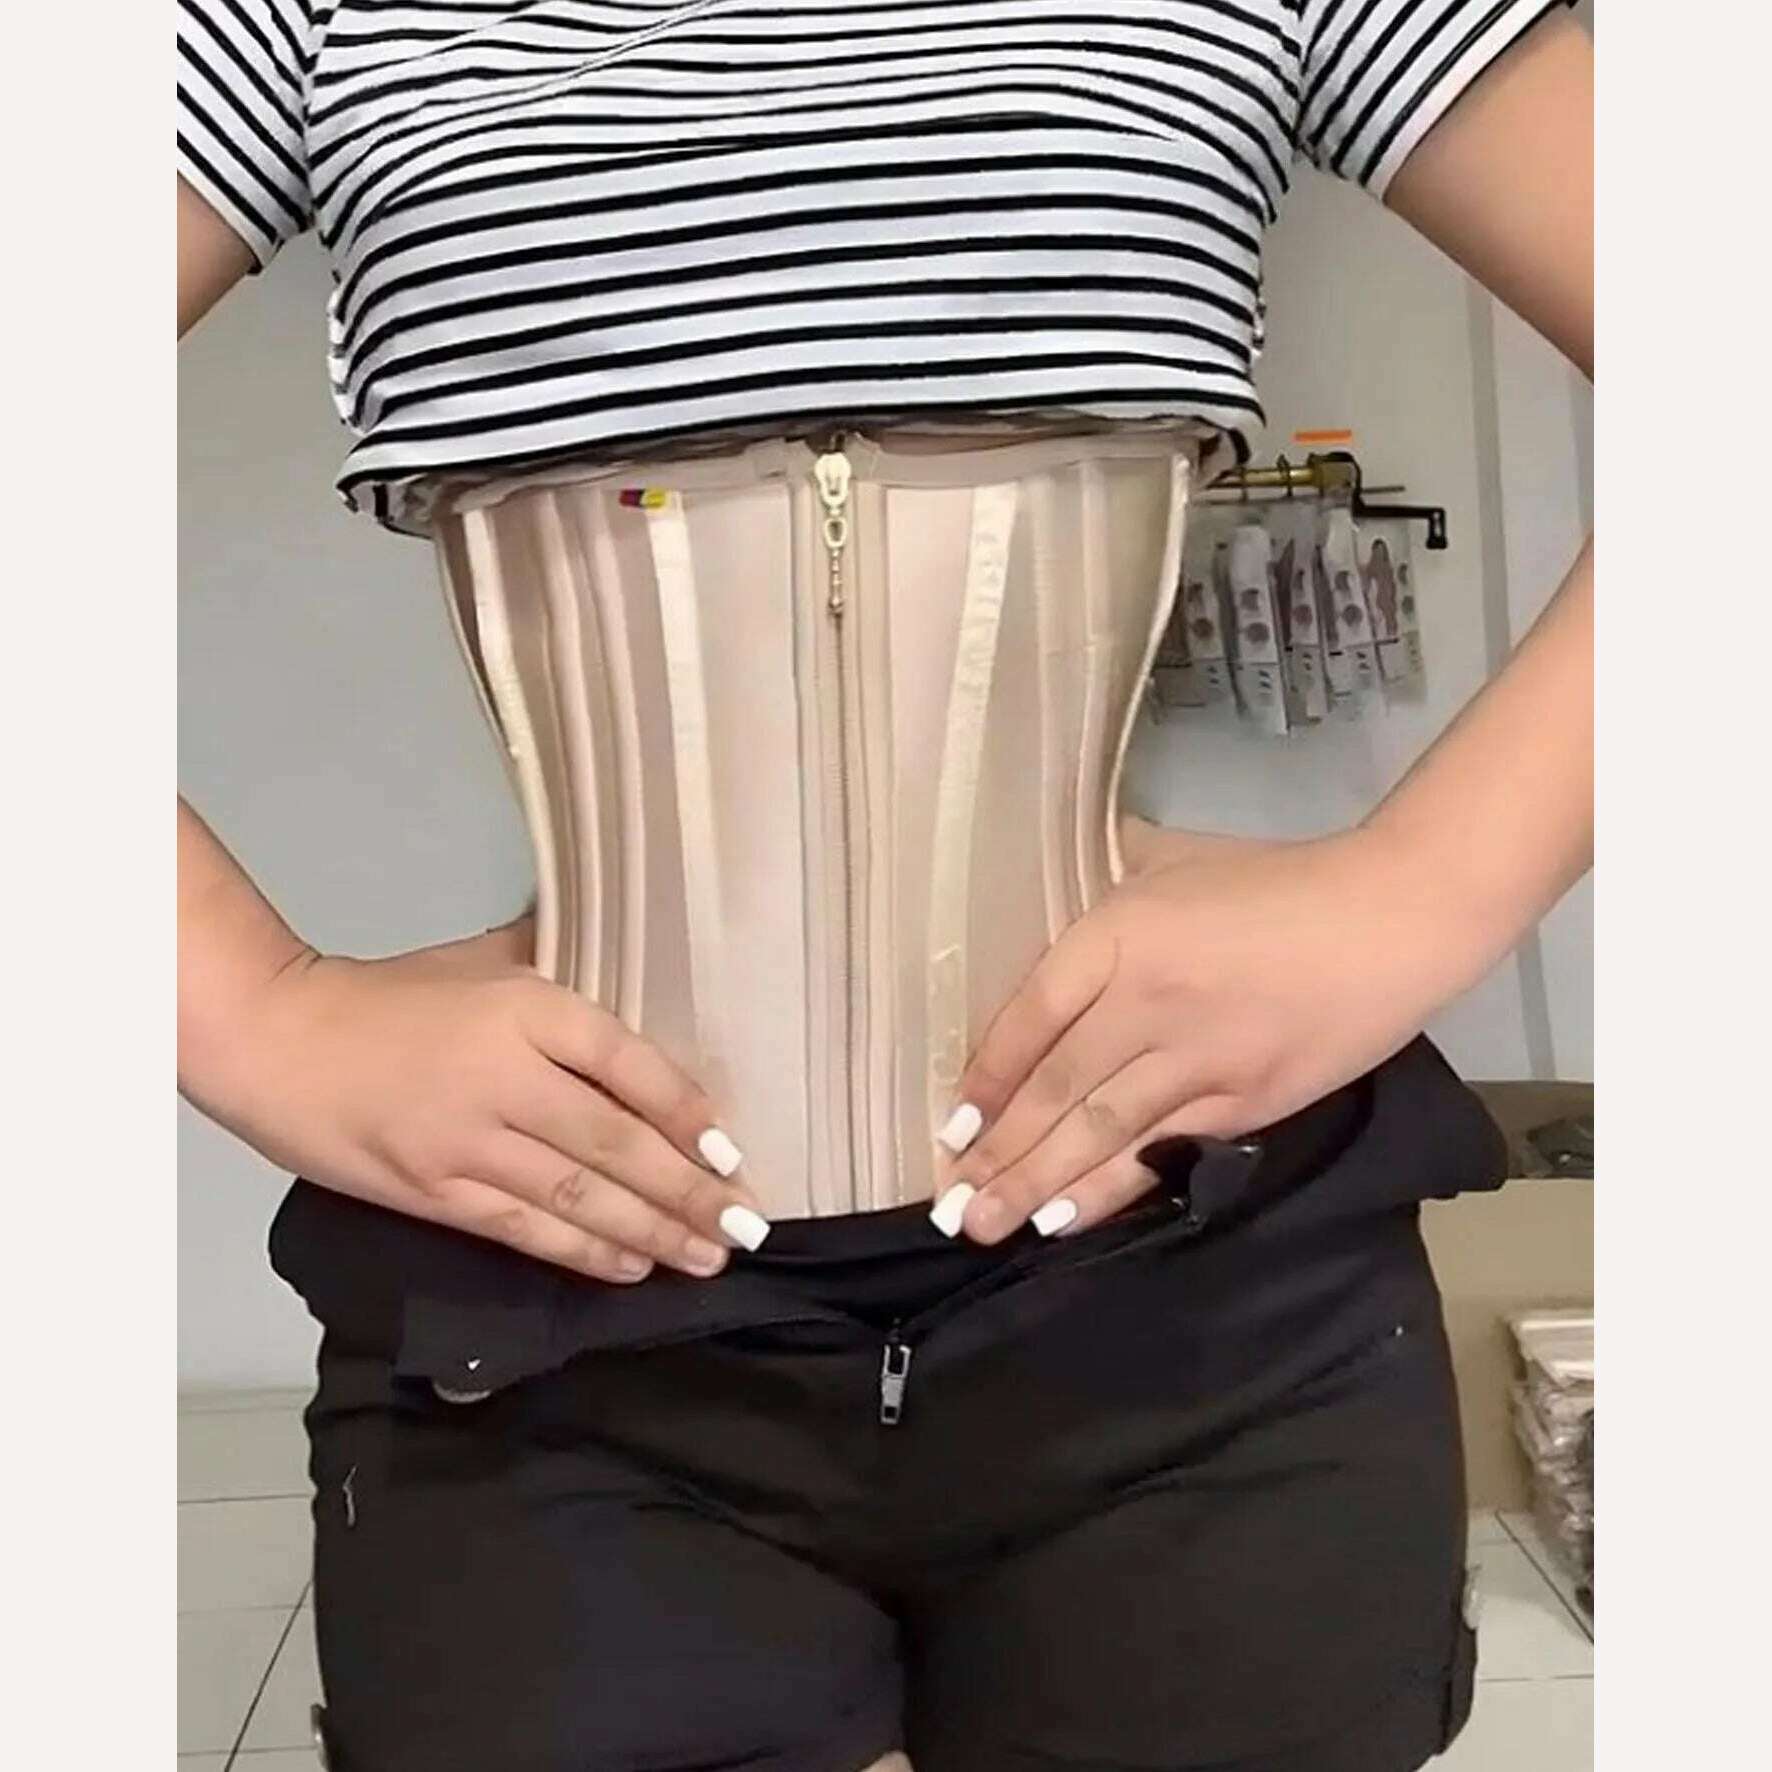 KIMLUD, Waist Trainer Belly Slimming Belt Body Shaper Modeling Strap Fajas Colombianas Shaping Corset Binder Shapewear for Women, Khaki / L, KIMLUD Womens Clothes